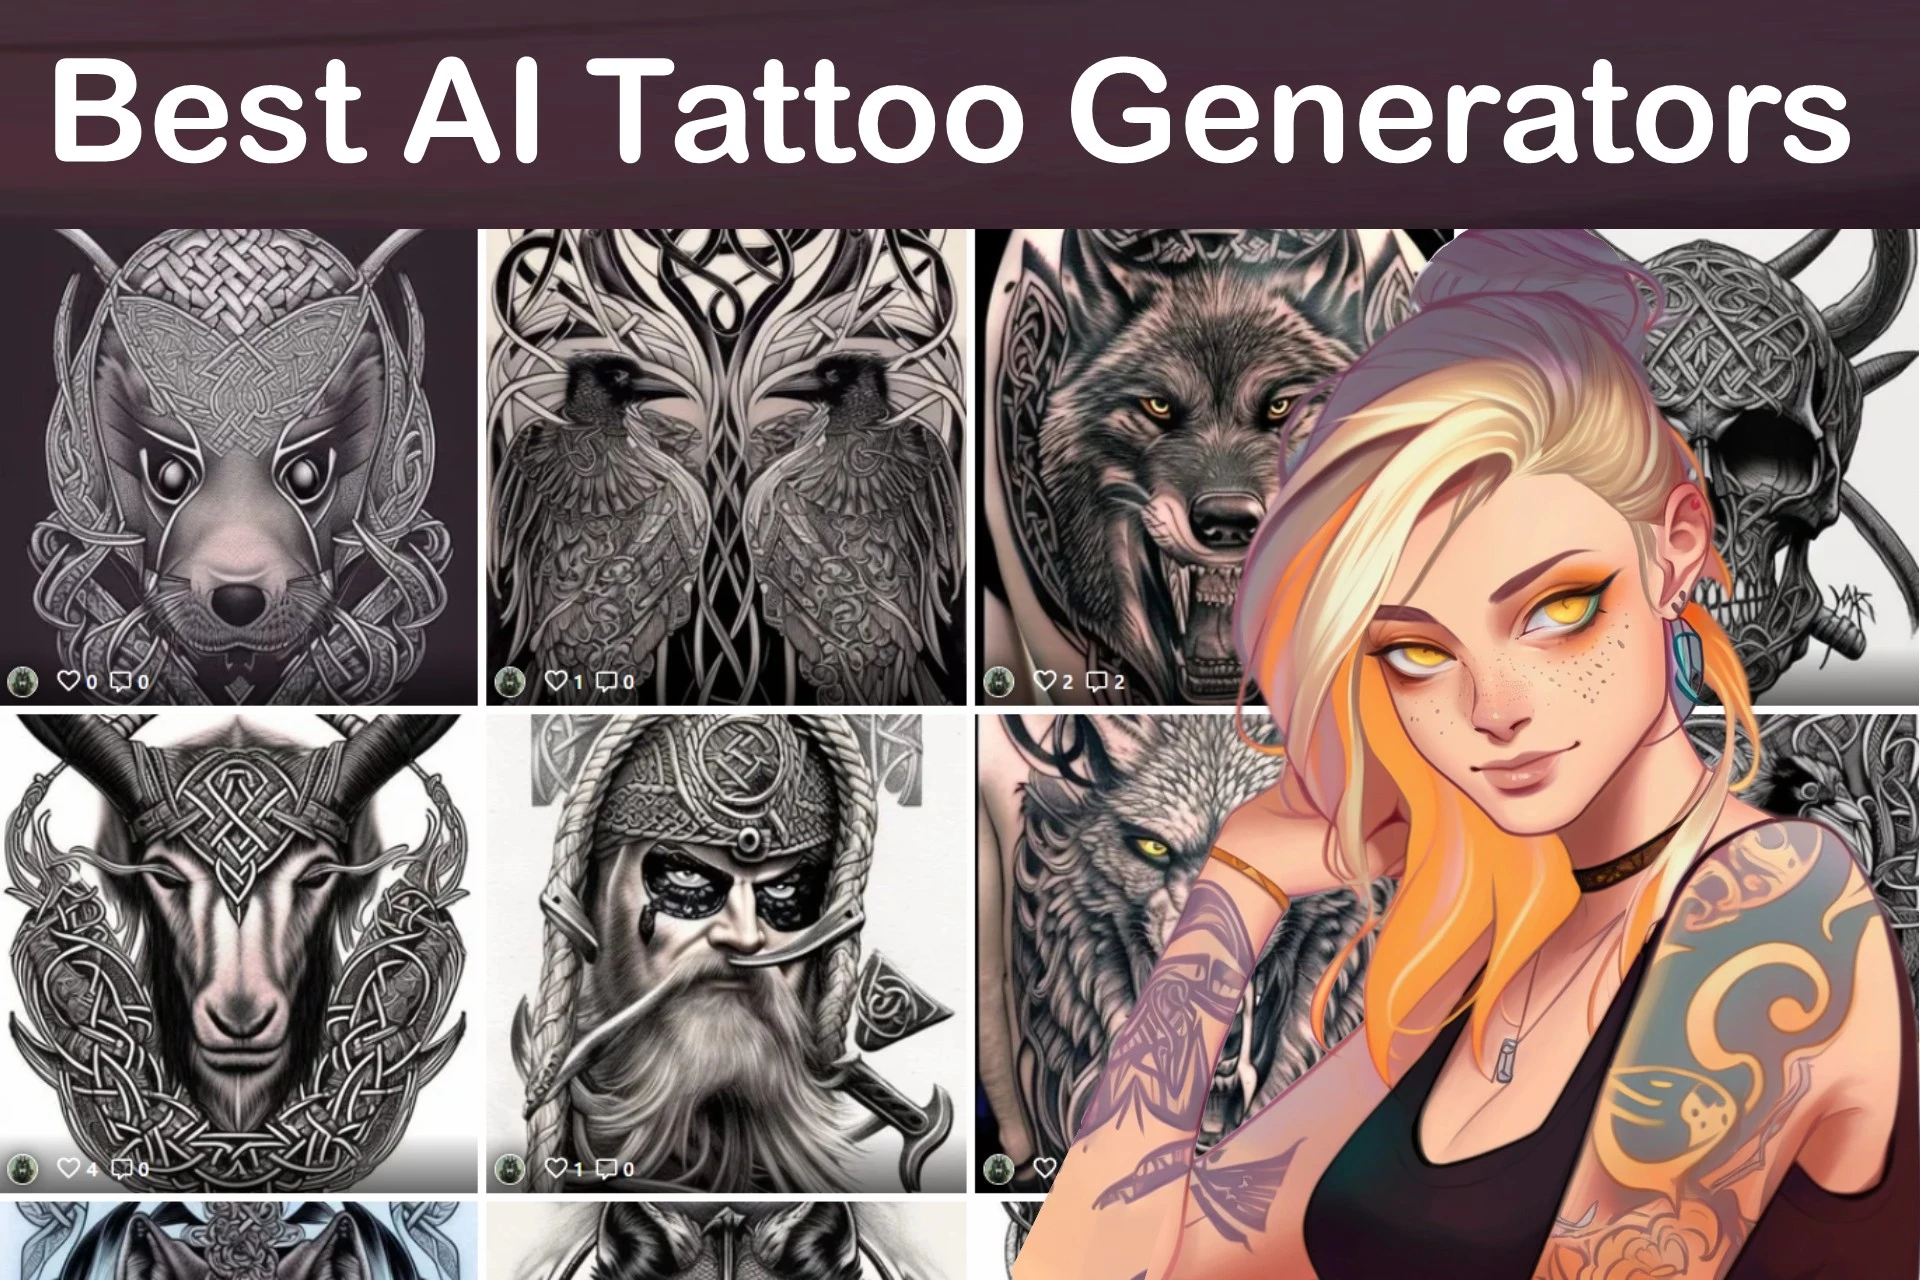 Tattoo example generator